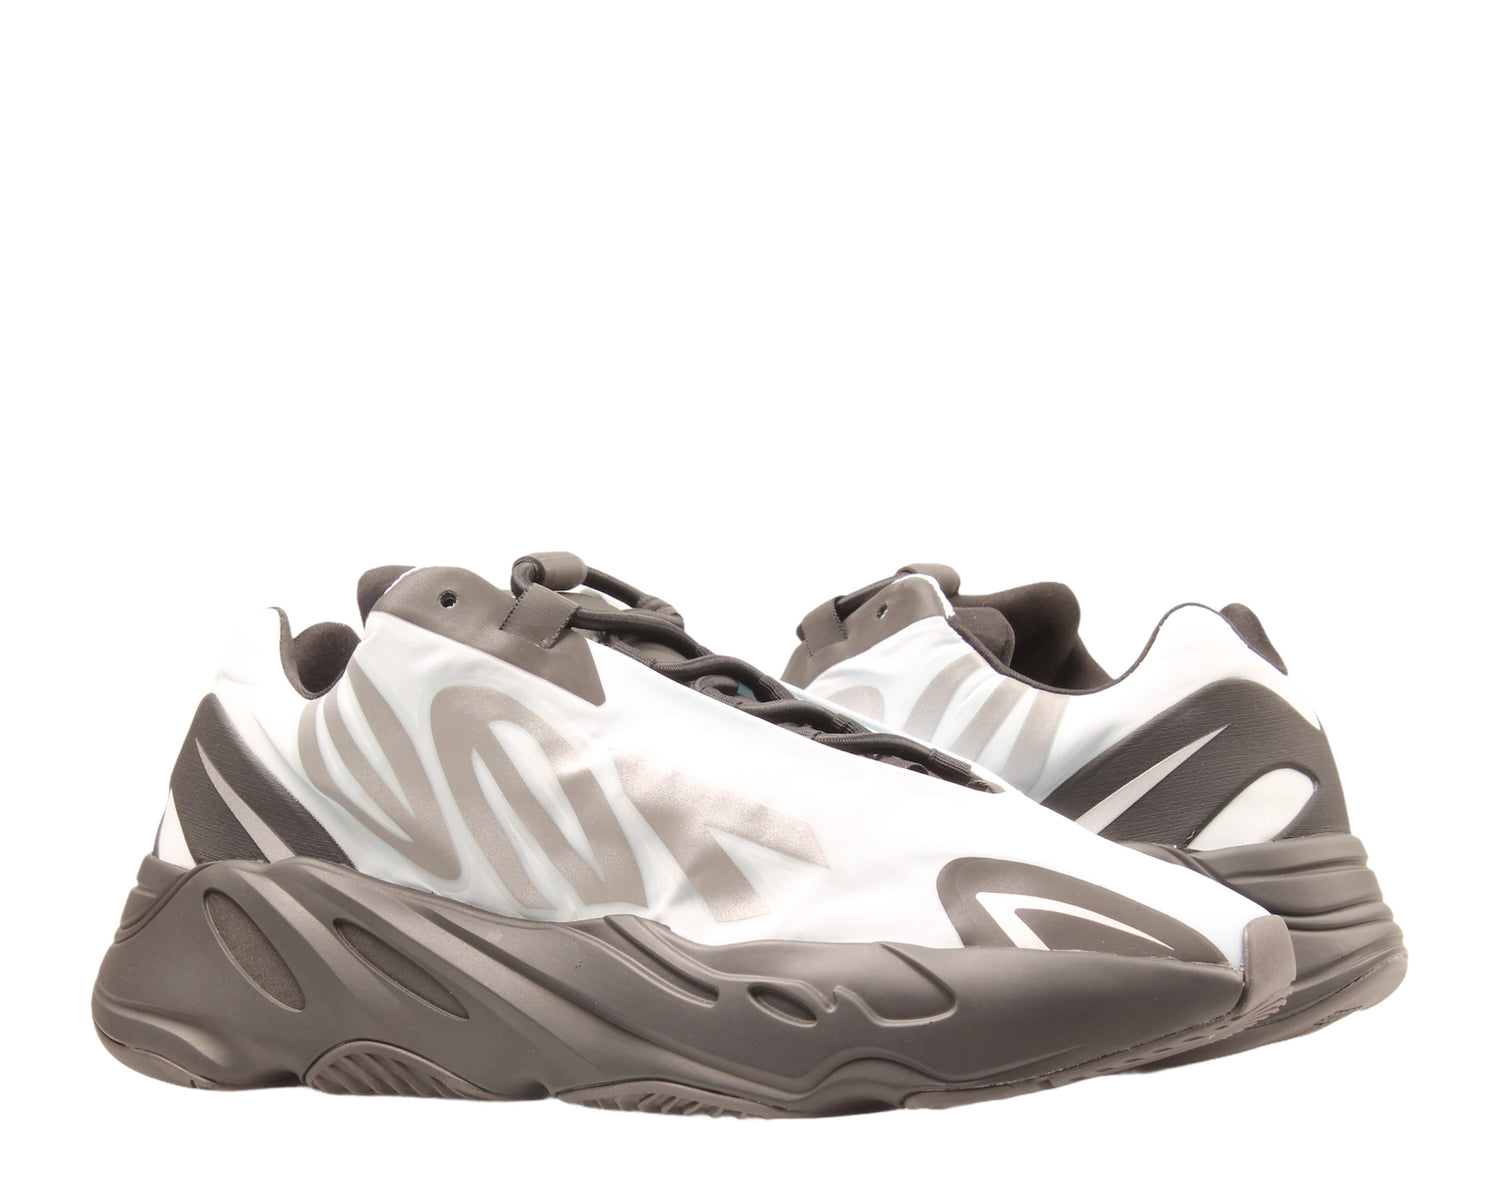 Adidas Yeezy Boost 700 MNVN Men's Shoes